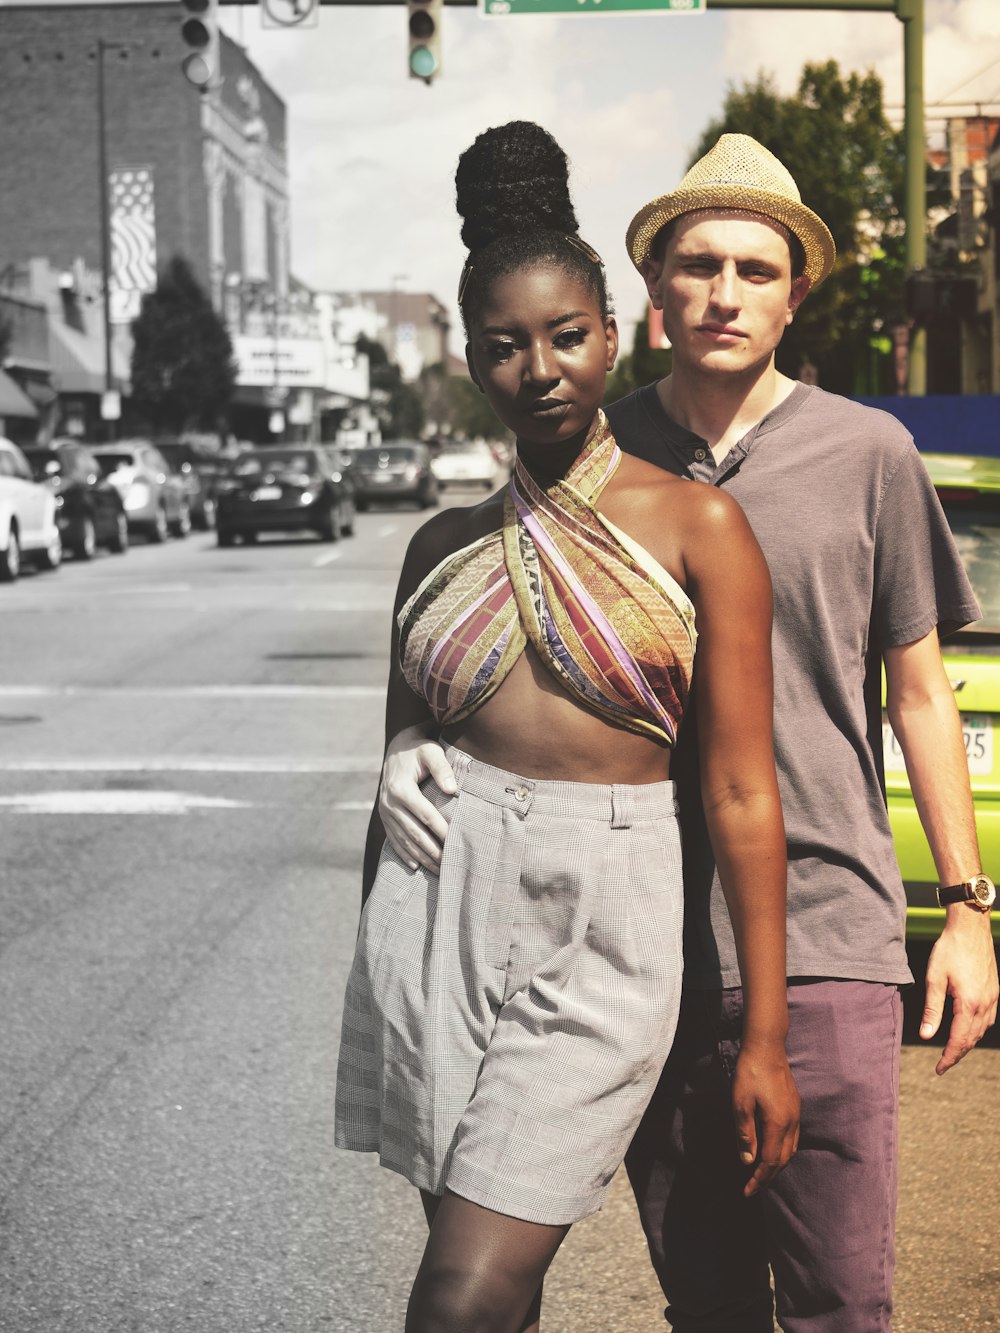 An African American woman next to a caucasian man.